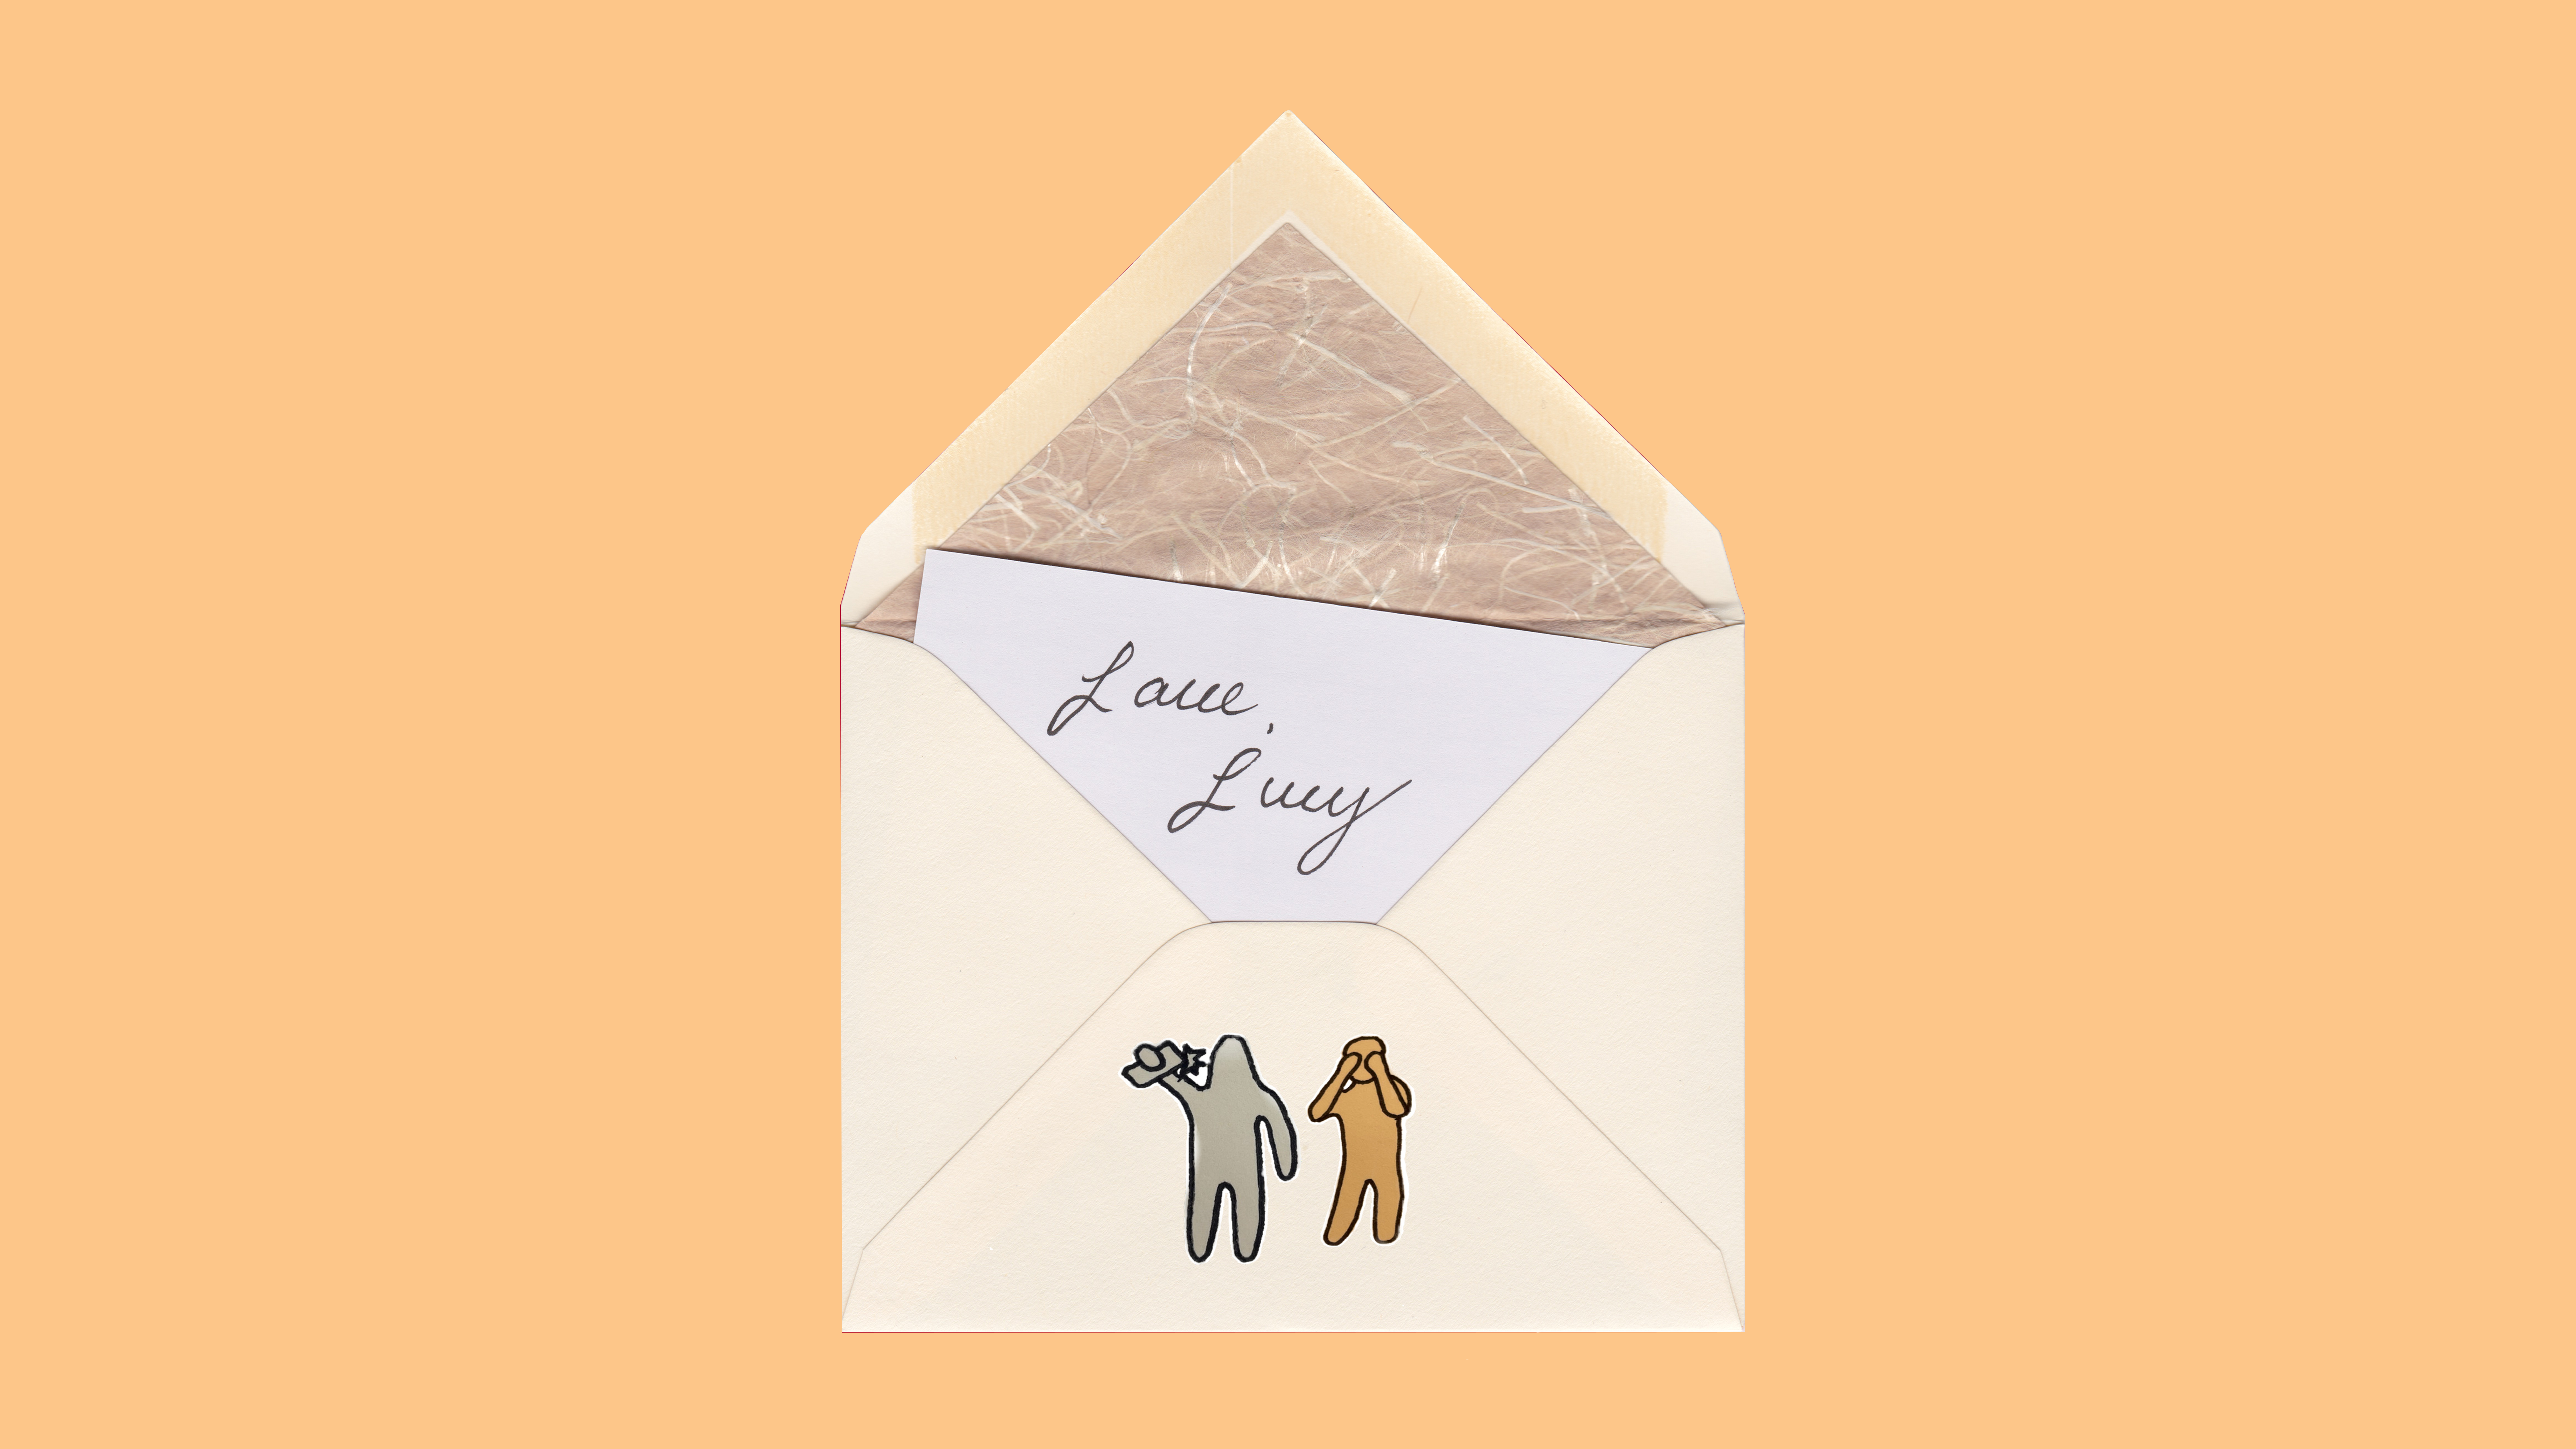 white envelope on orange background with figures on the envelope.